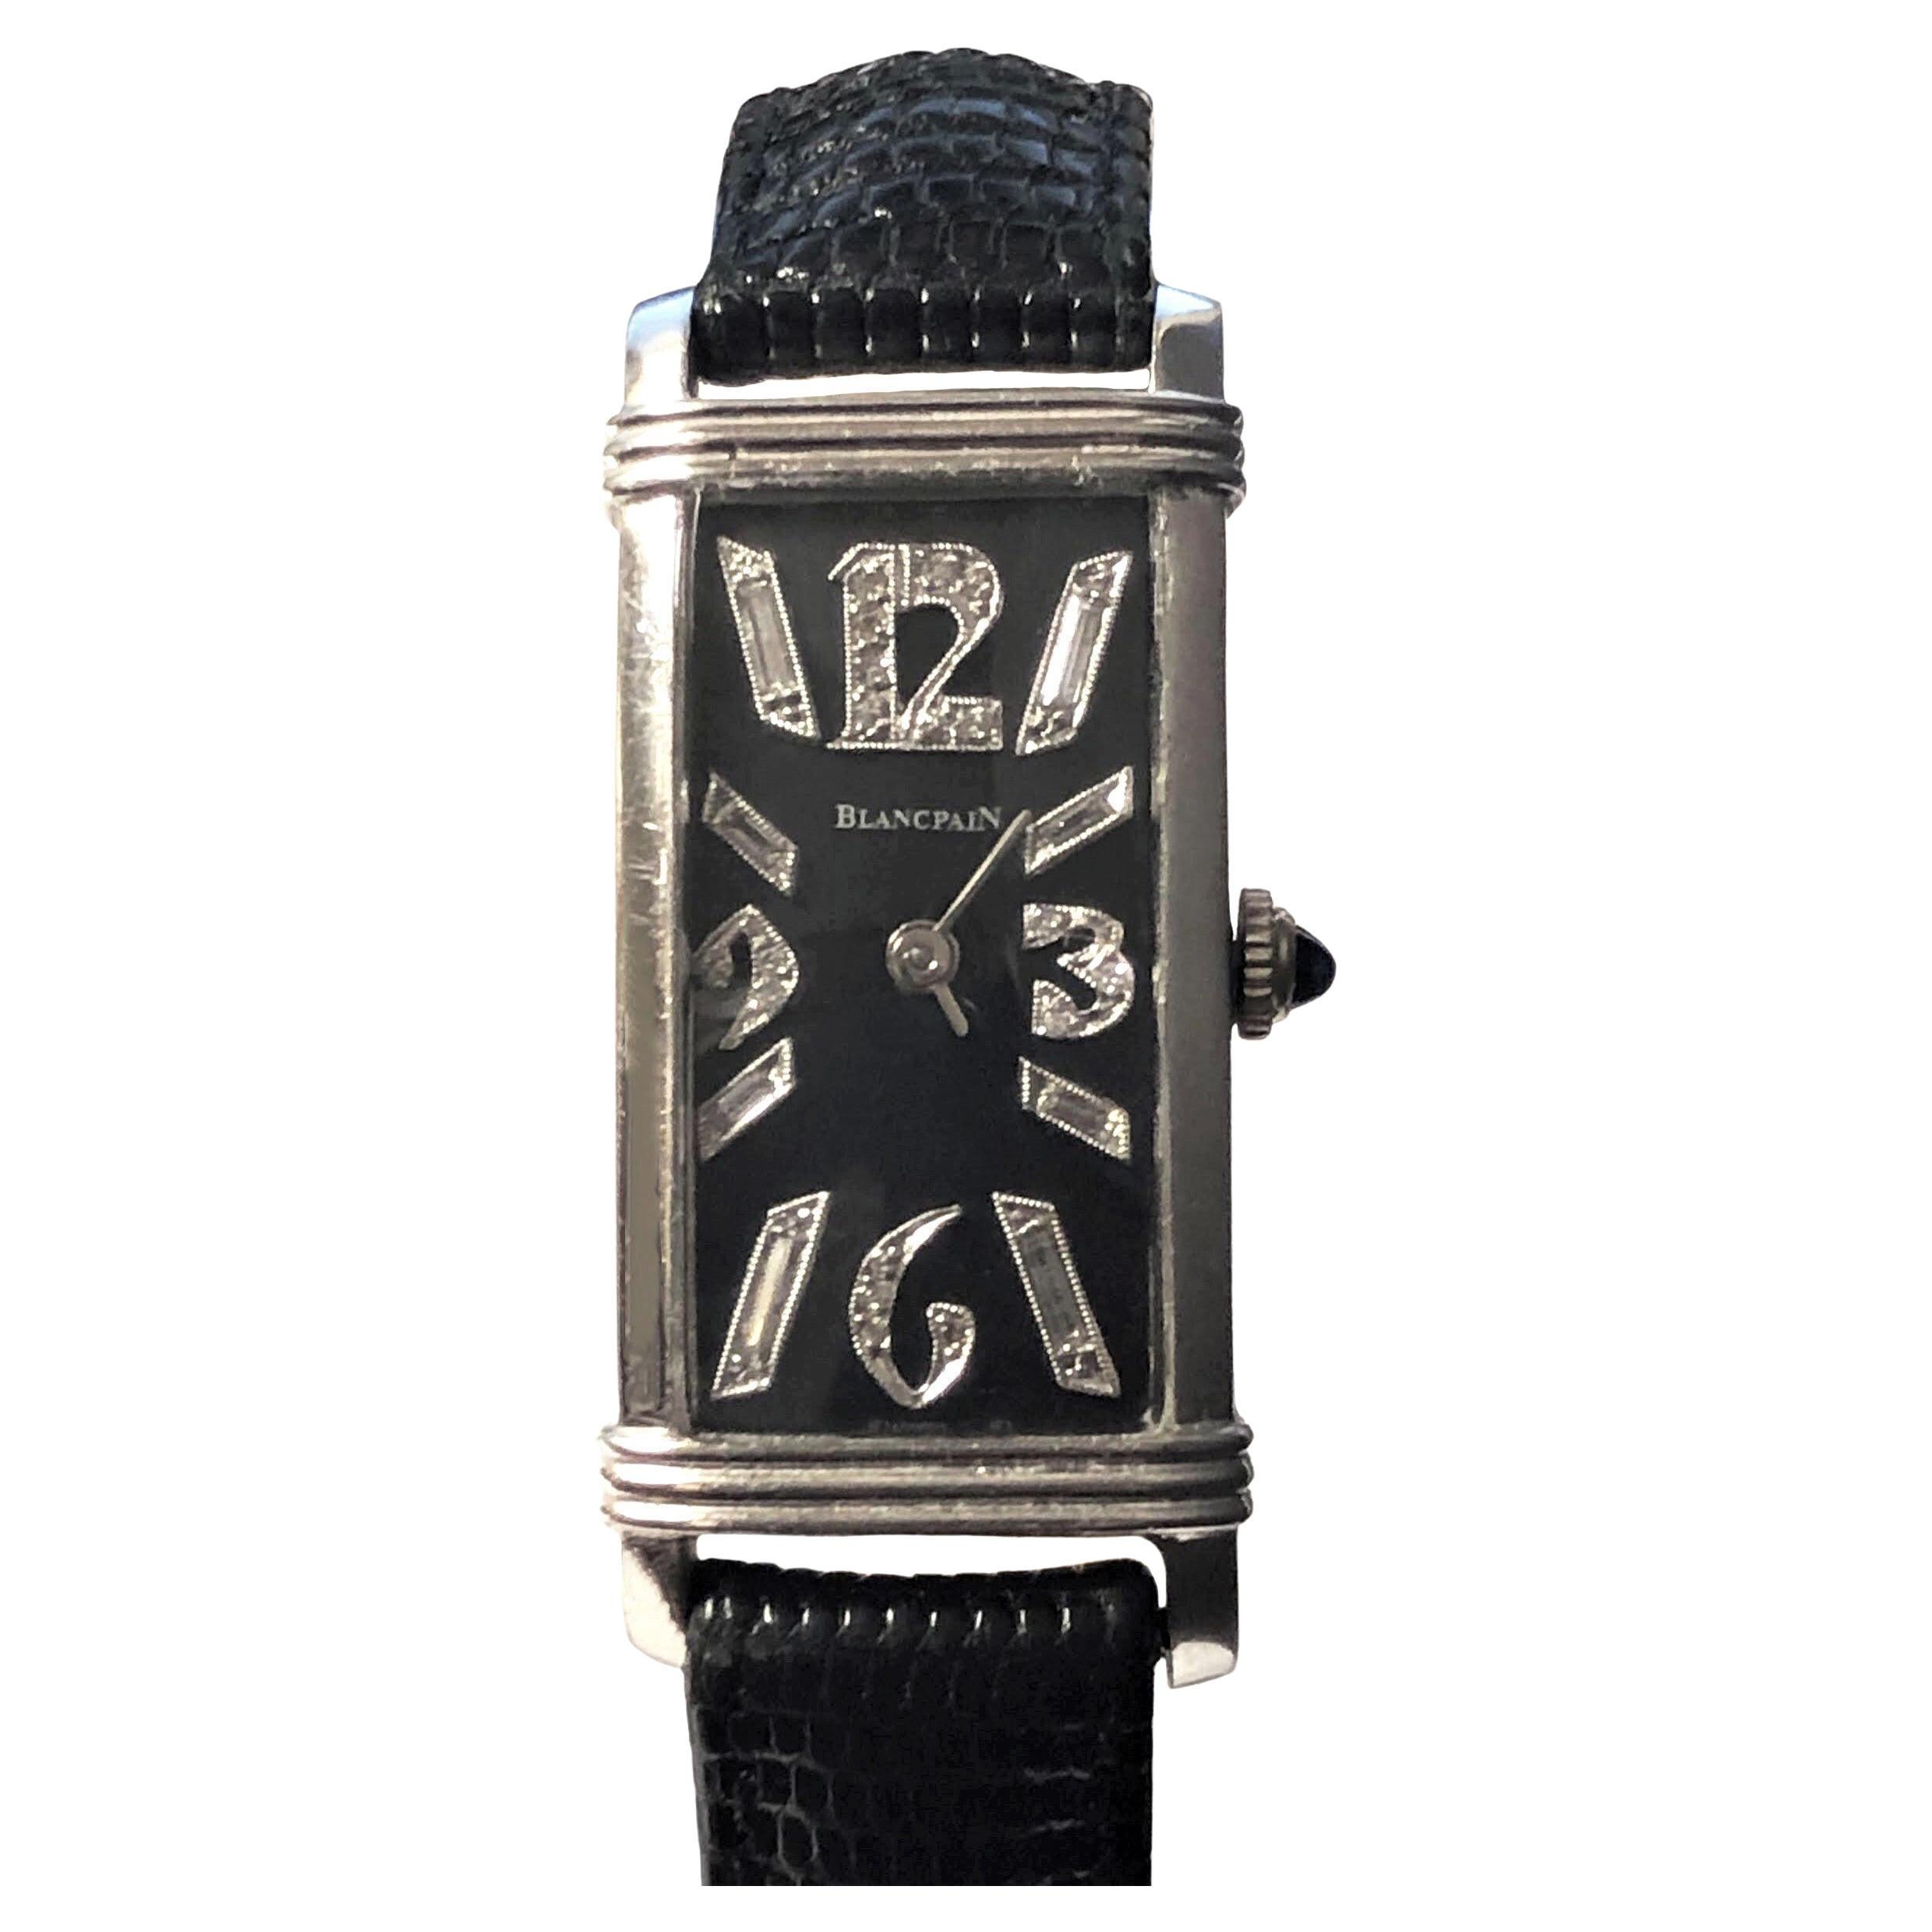 Art Deco Blancpain Platinum and Diamond Dial Gents Wrist Watch